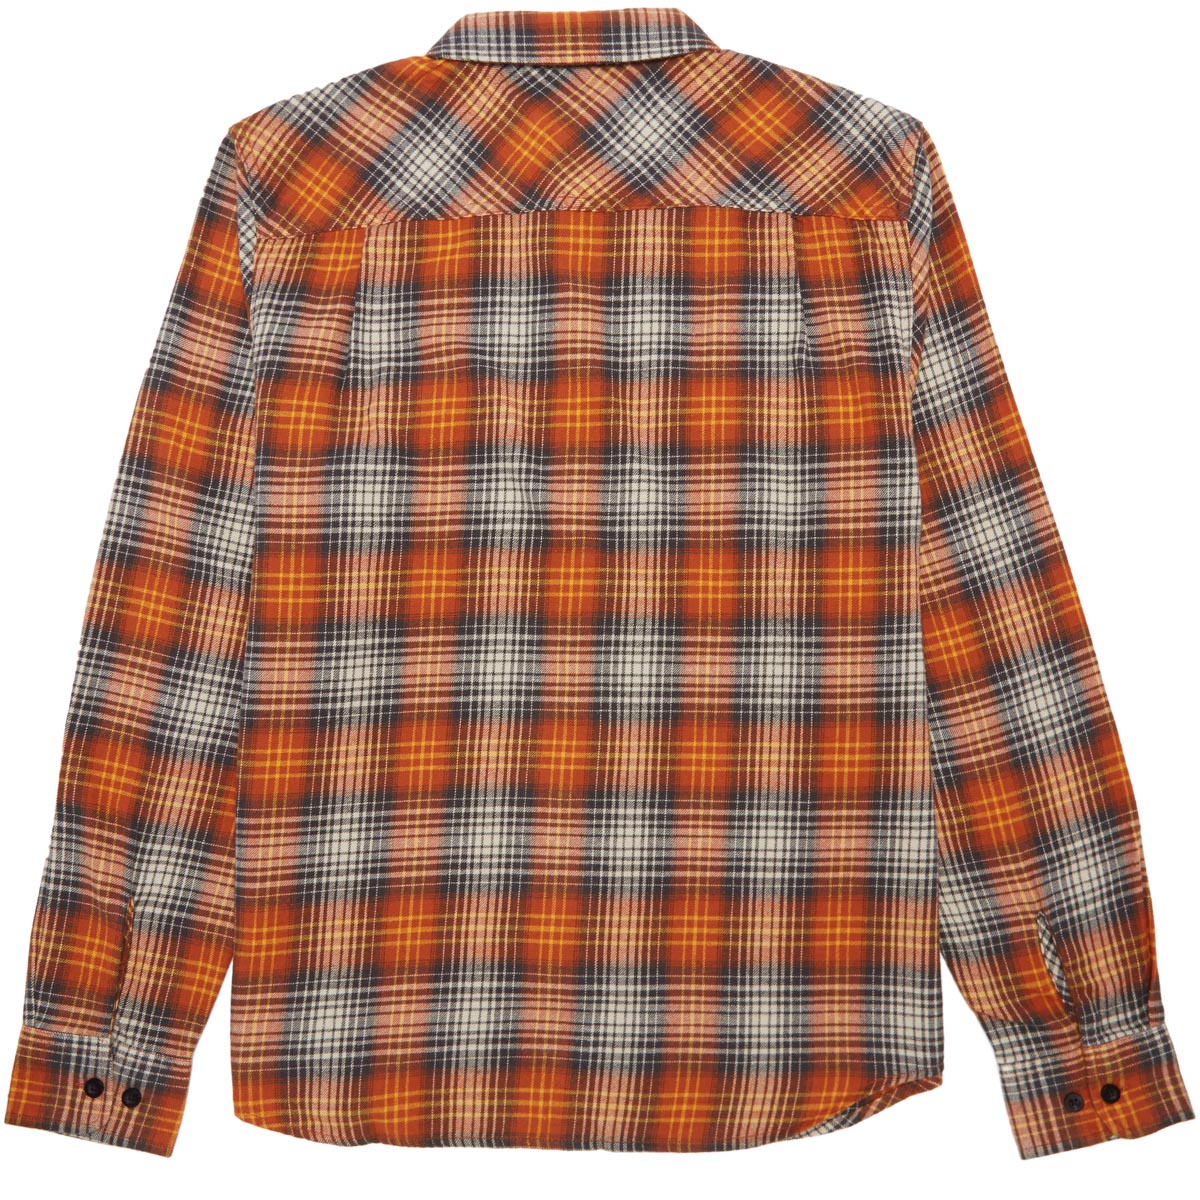 Brixton Bowery Lightweight Ultra Flannel Shirt - Terracotta/Black image 2